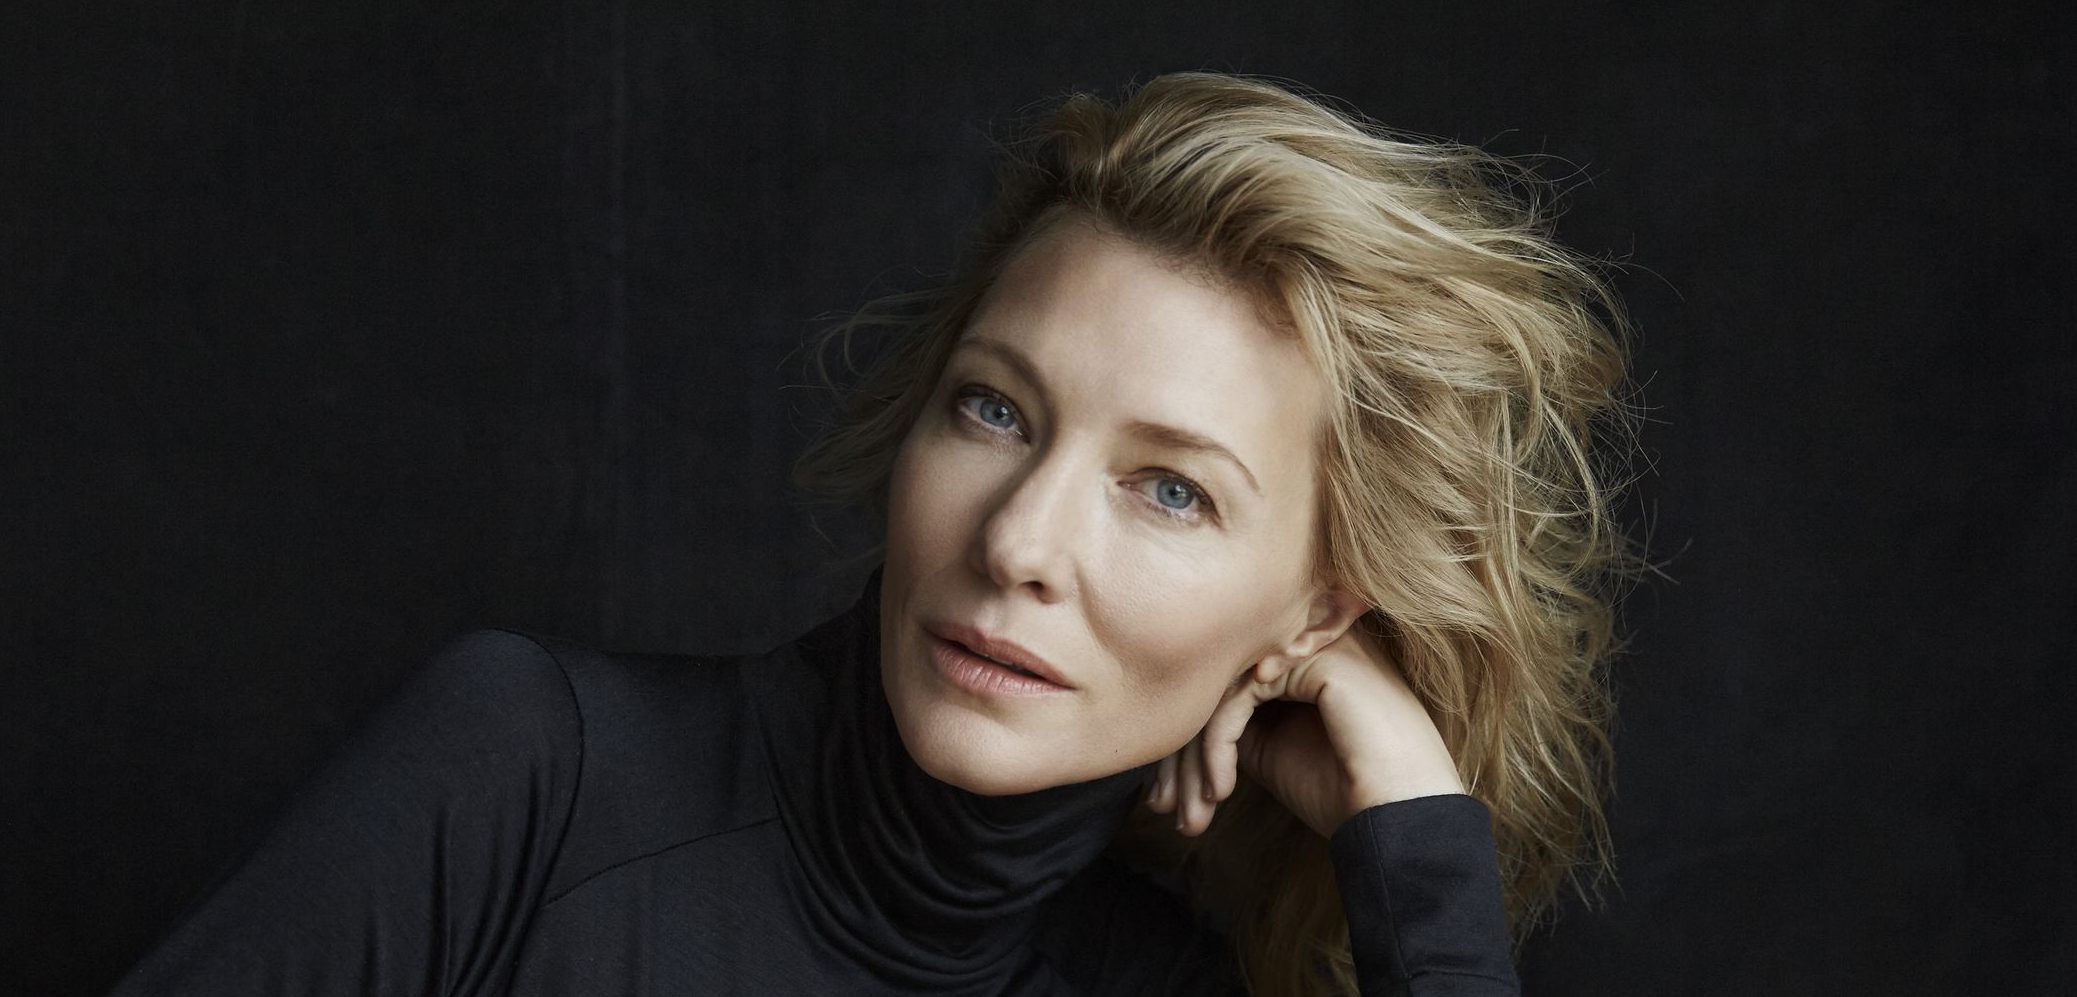 Cate Blanchett, Elton John, and Shah Rukh Khan named as 2018 Crystal Award recipients